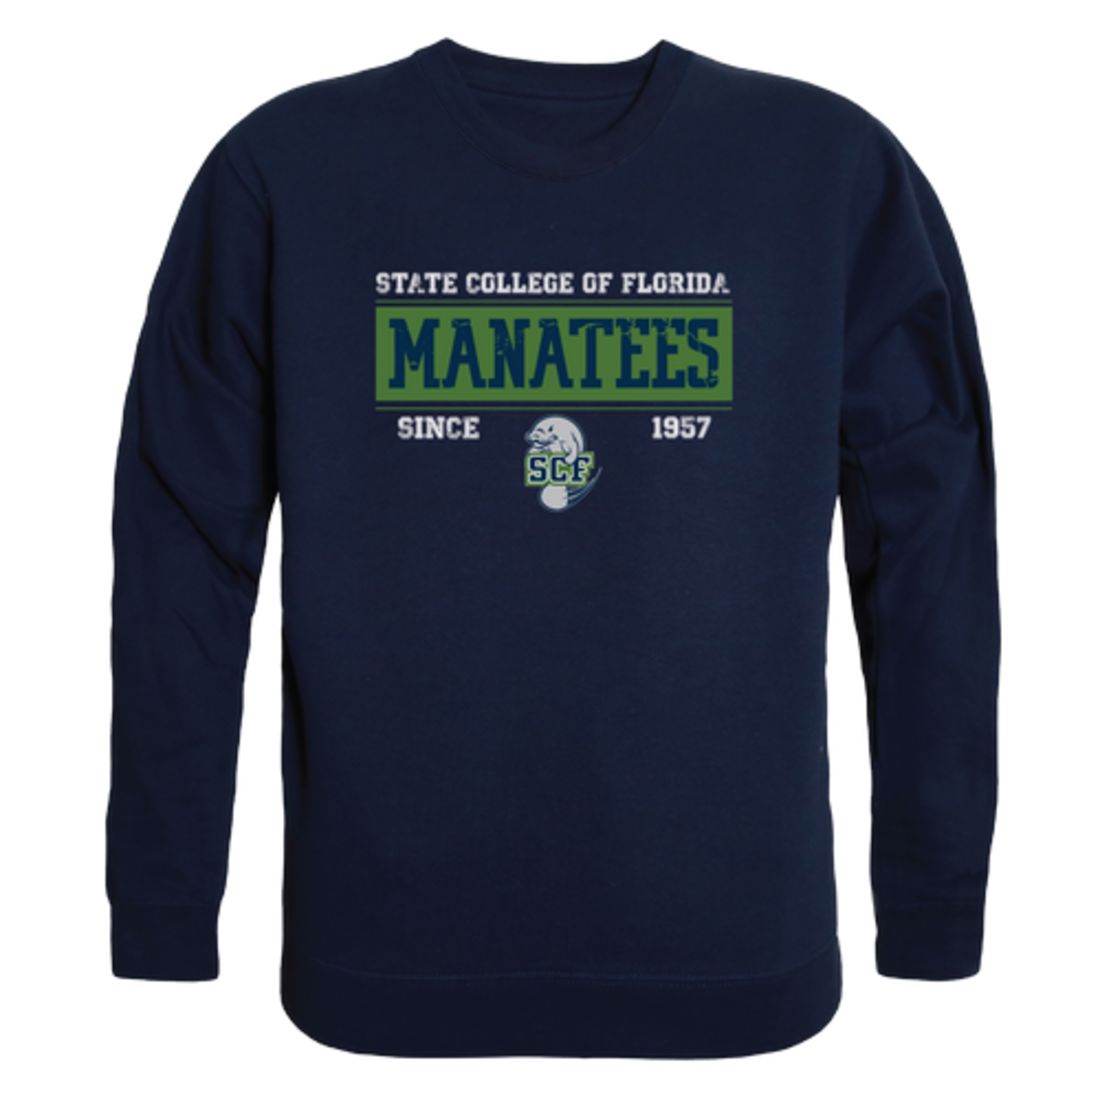 State-College-of-Florida-Manatees-Established-Fleece-Crewneck-Pullover-Sweatshirt